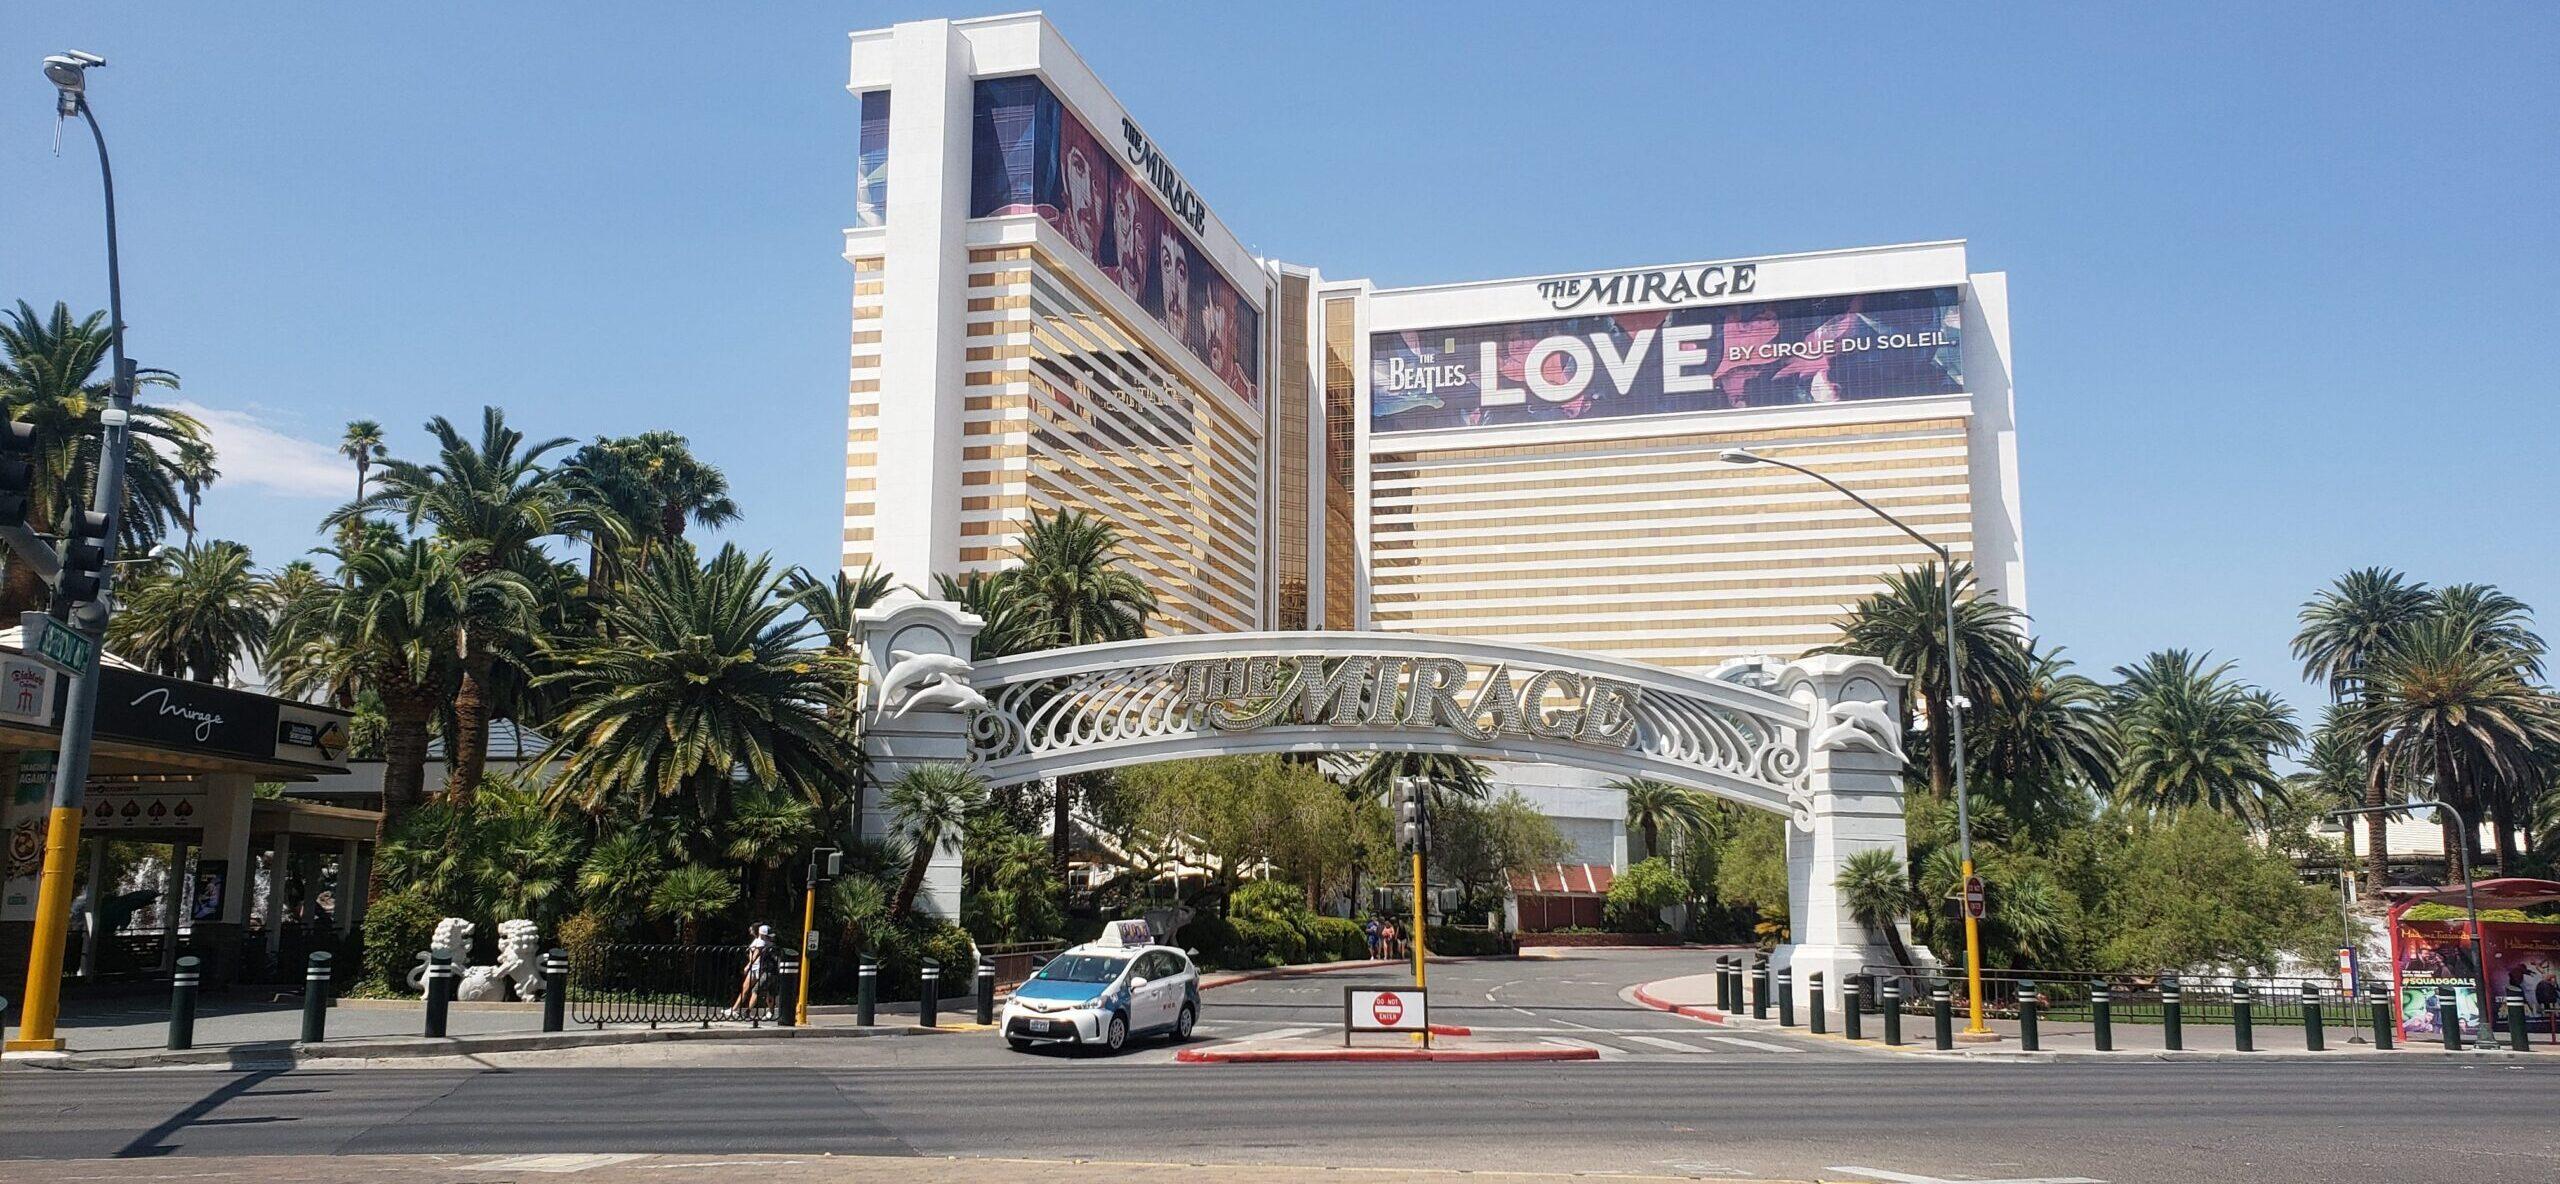 The Mirage in Las Vegas